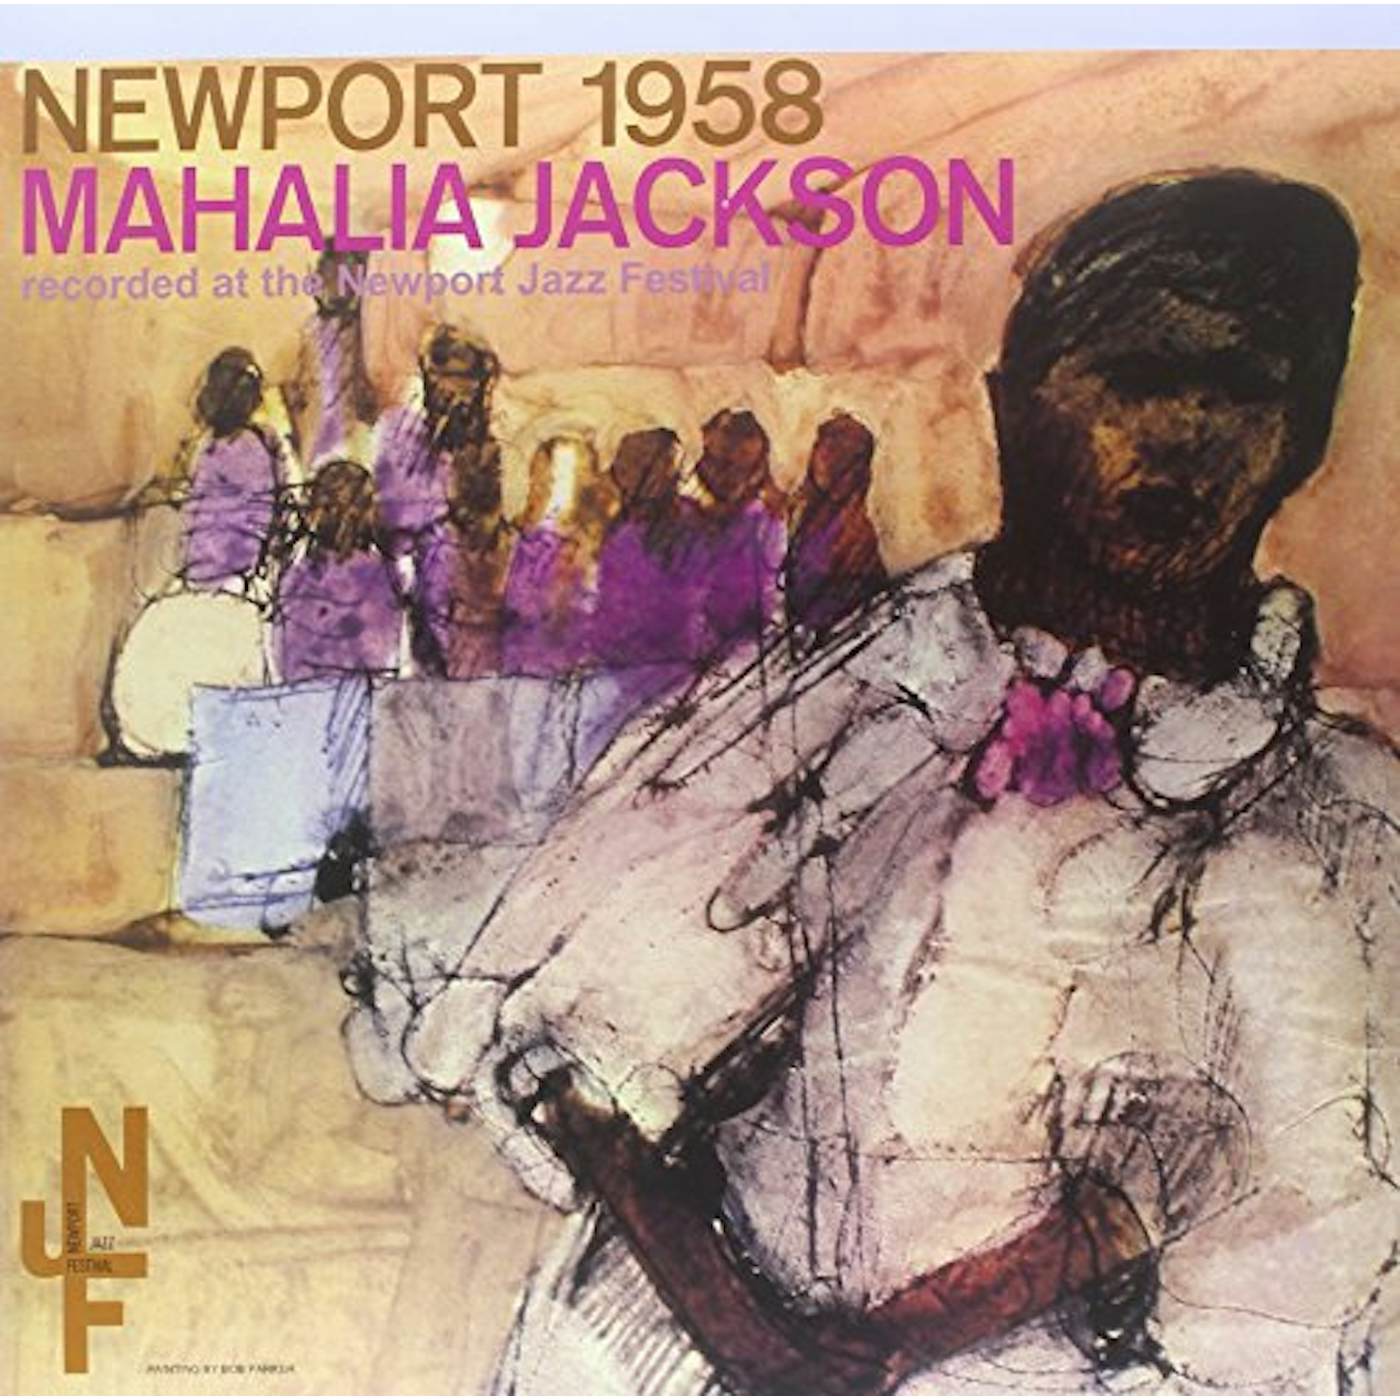 Mahalia Jackson NEWPORT 1958 Vinyl Record